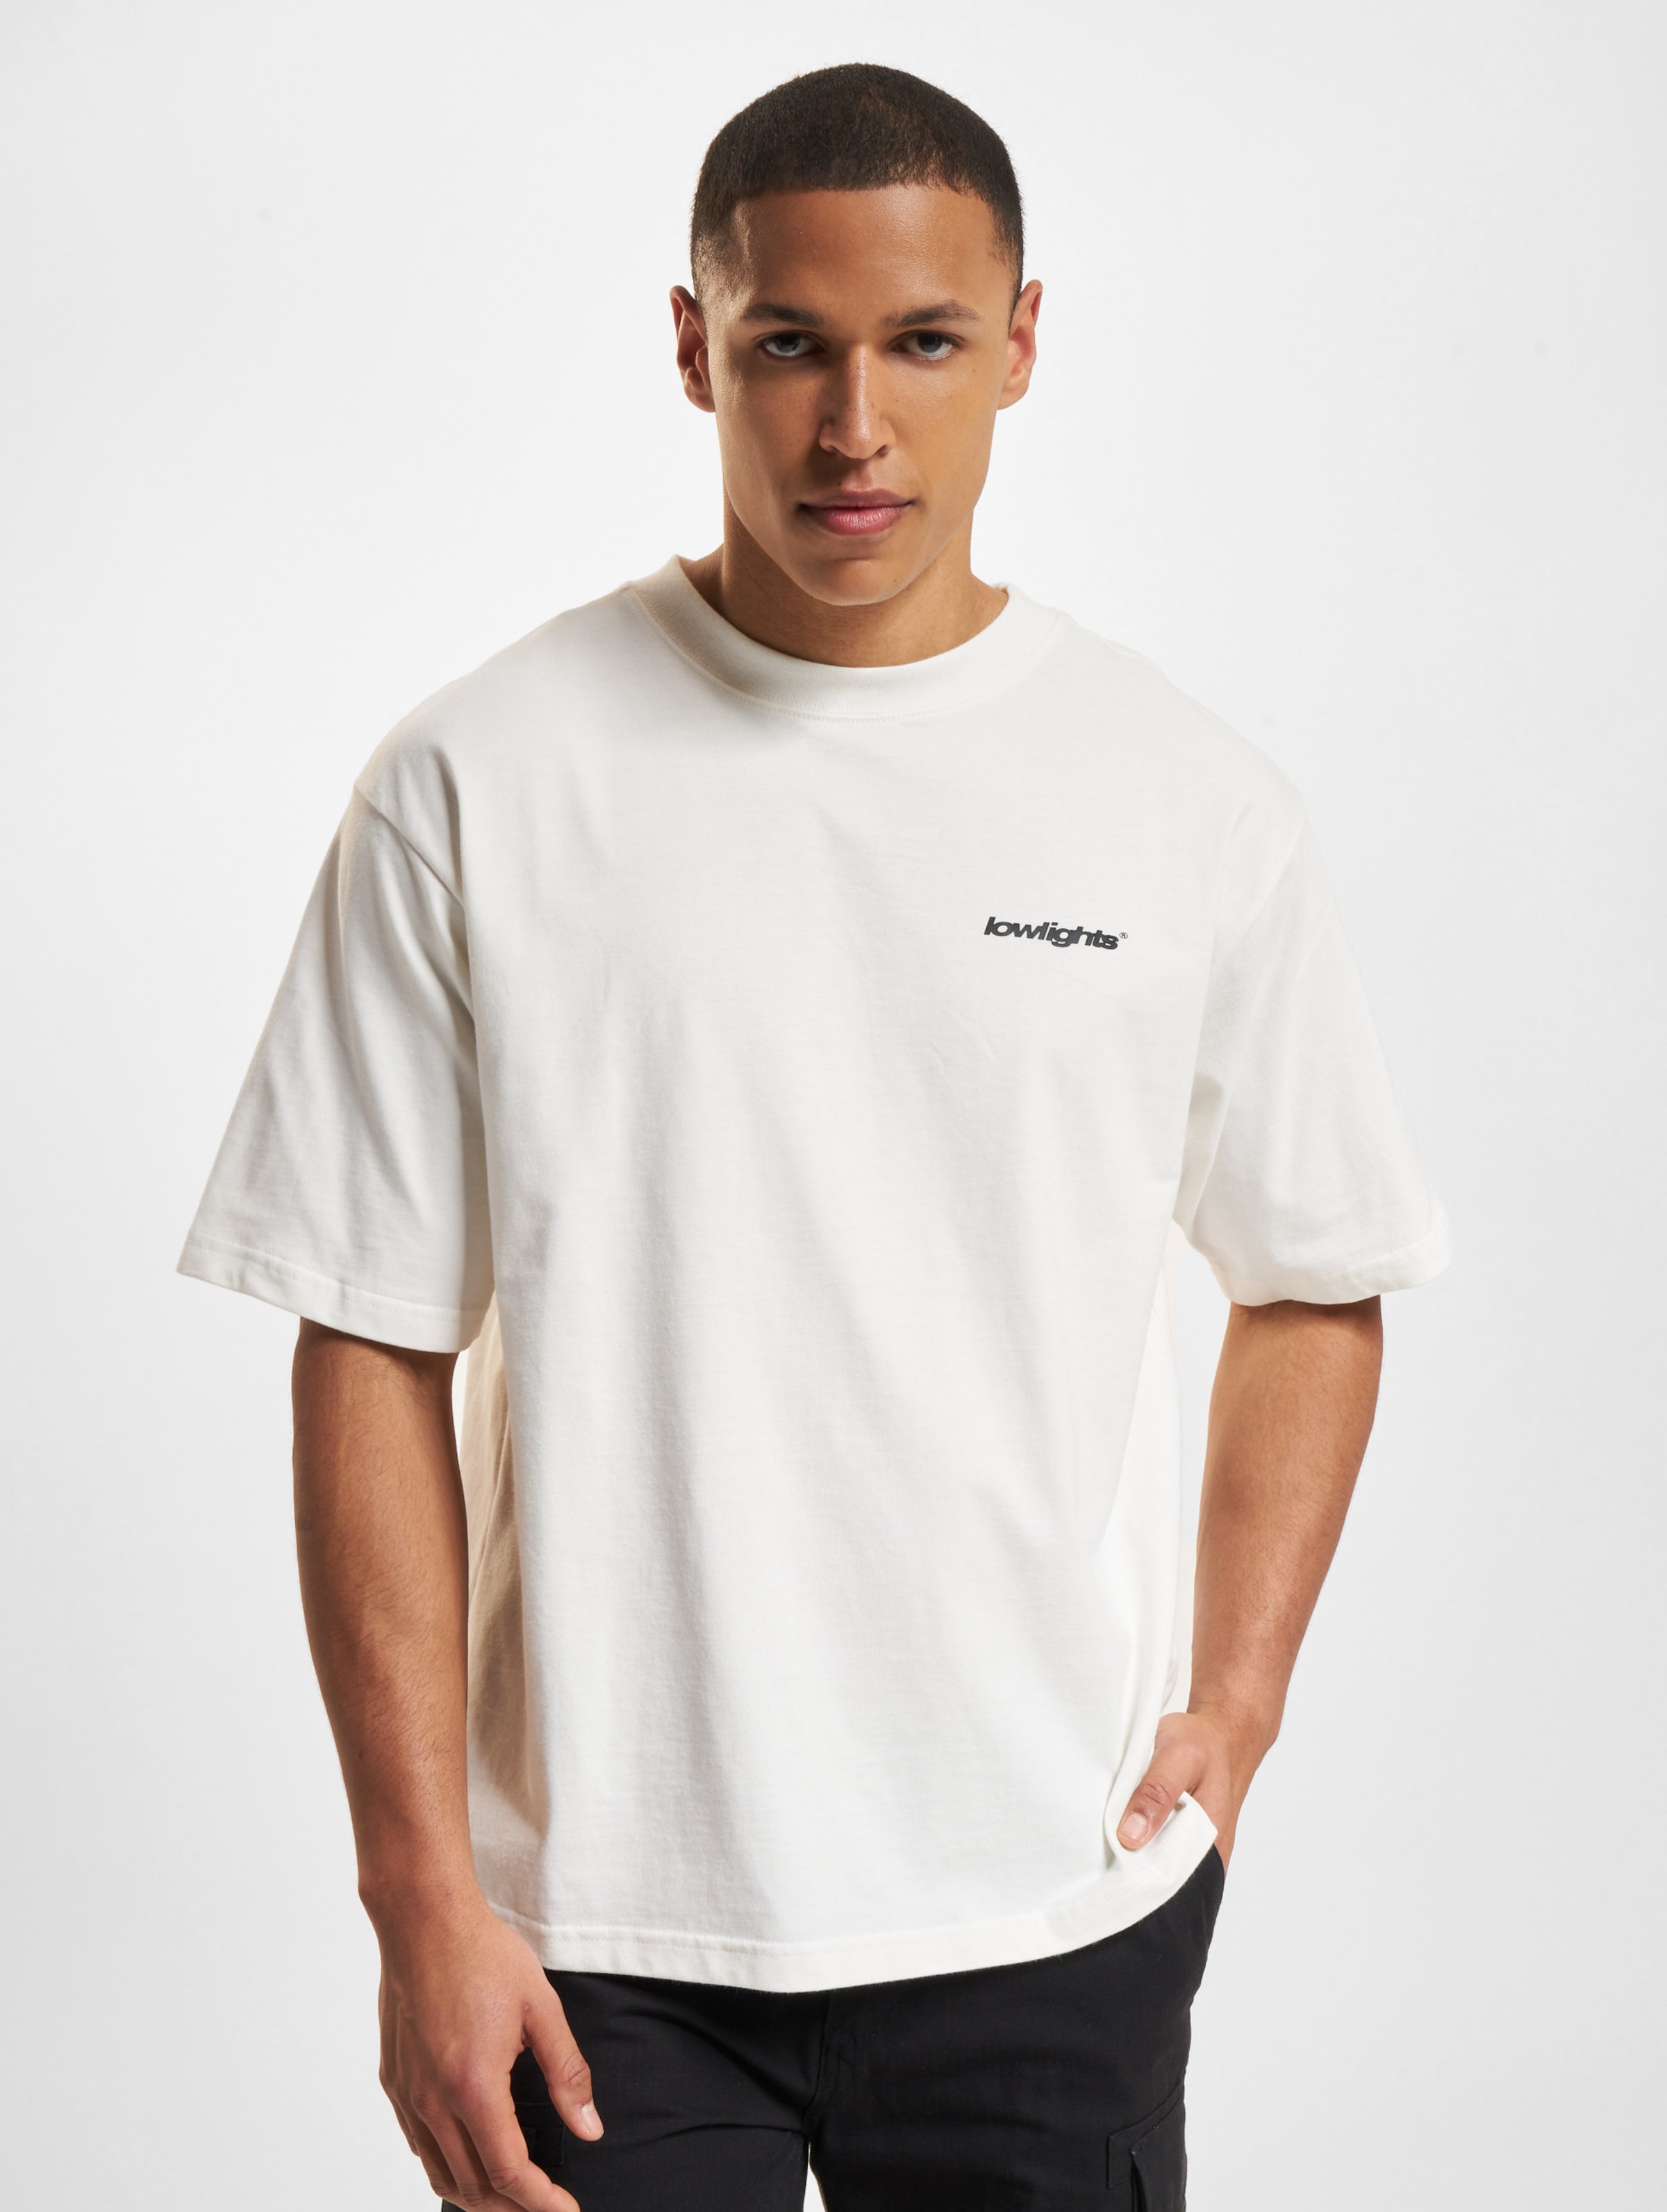 Low Lights Studios Basic T-Shirt ecru Männer,Unisex op kleur wit, Maat S